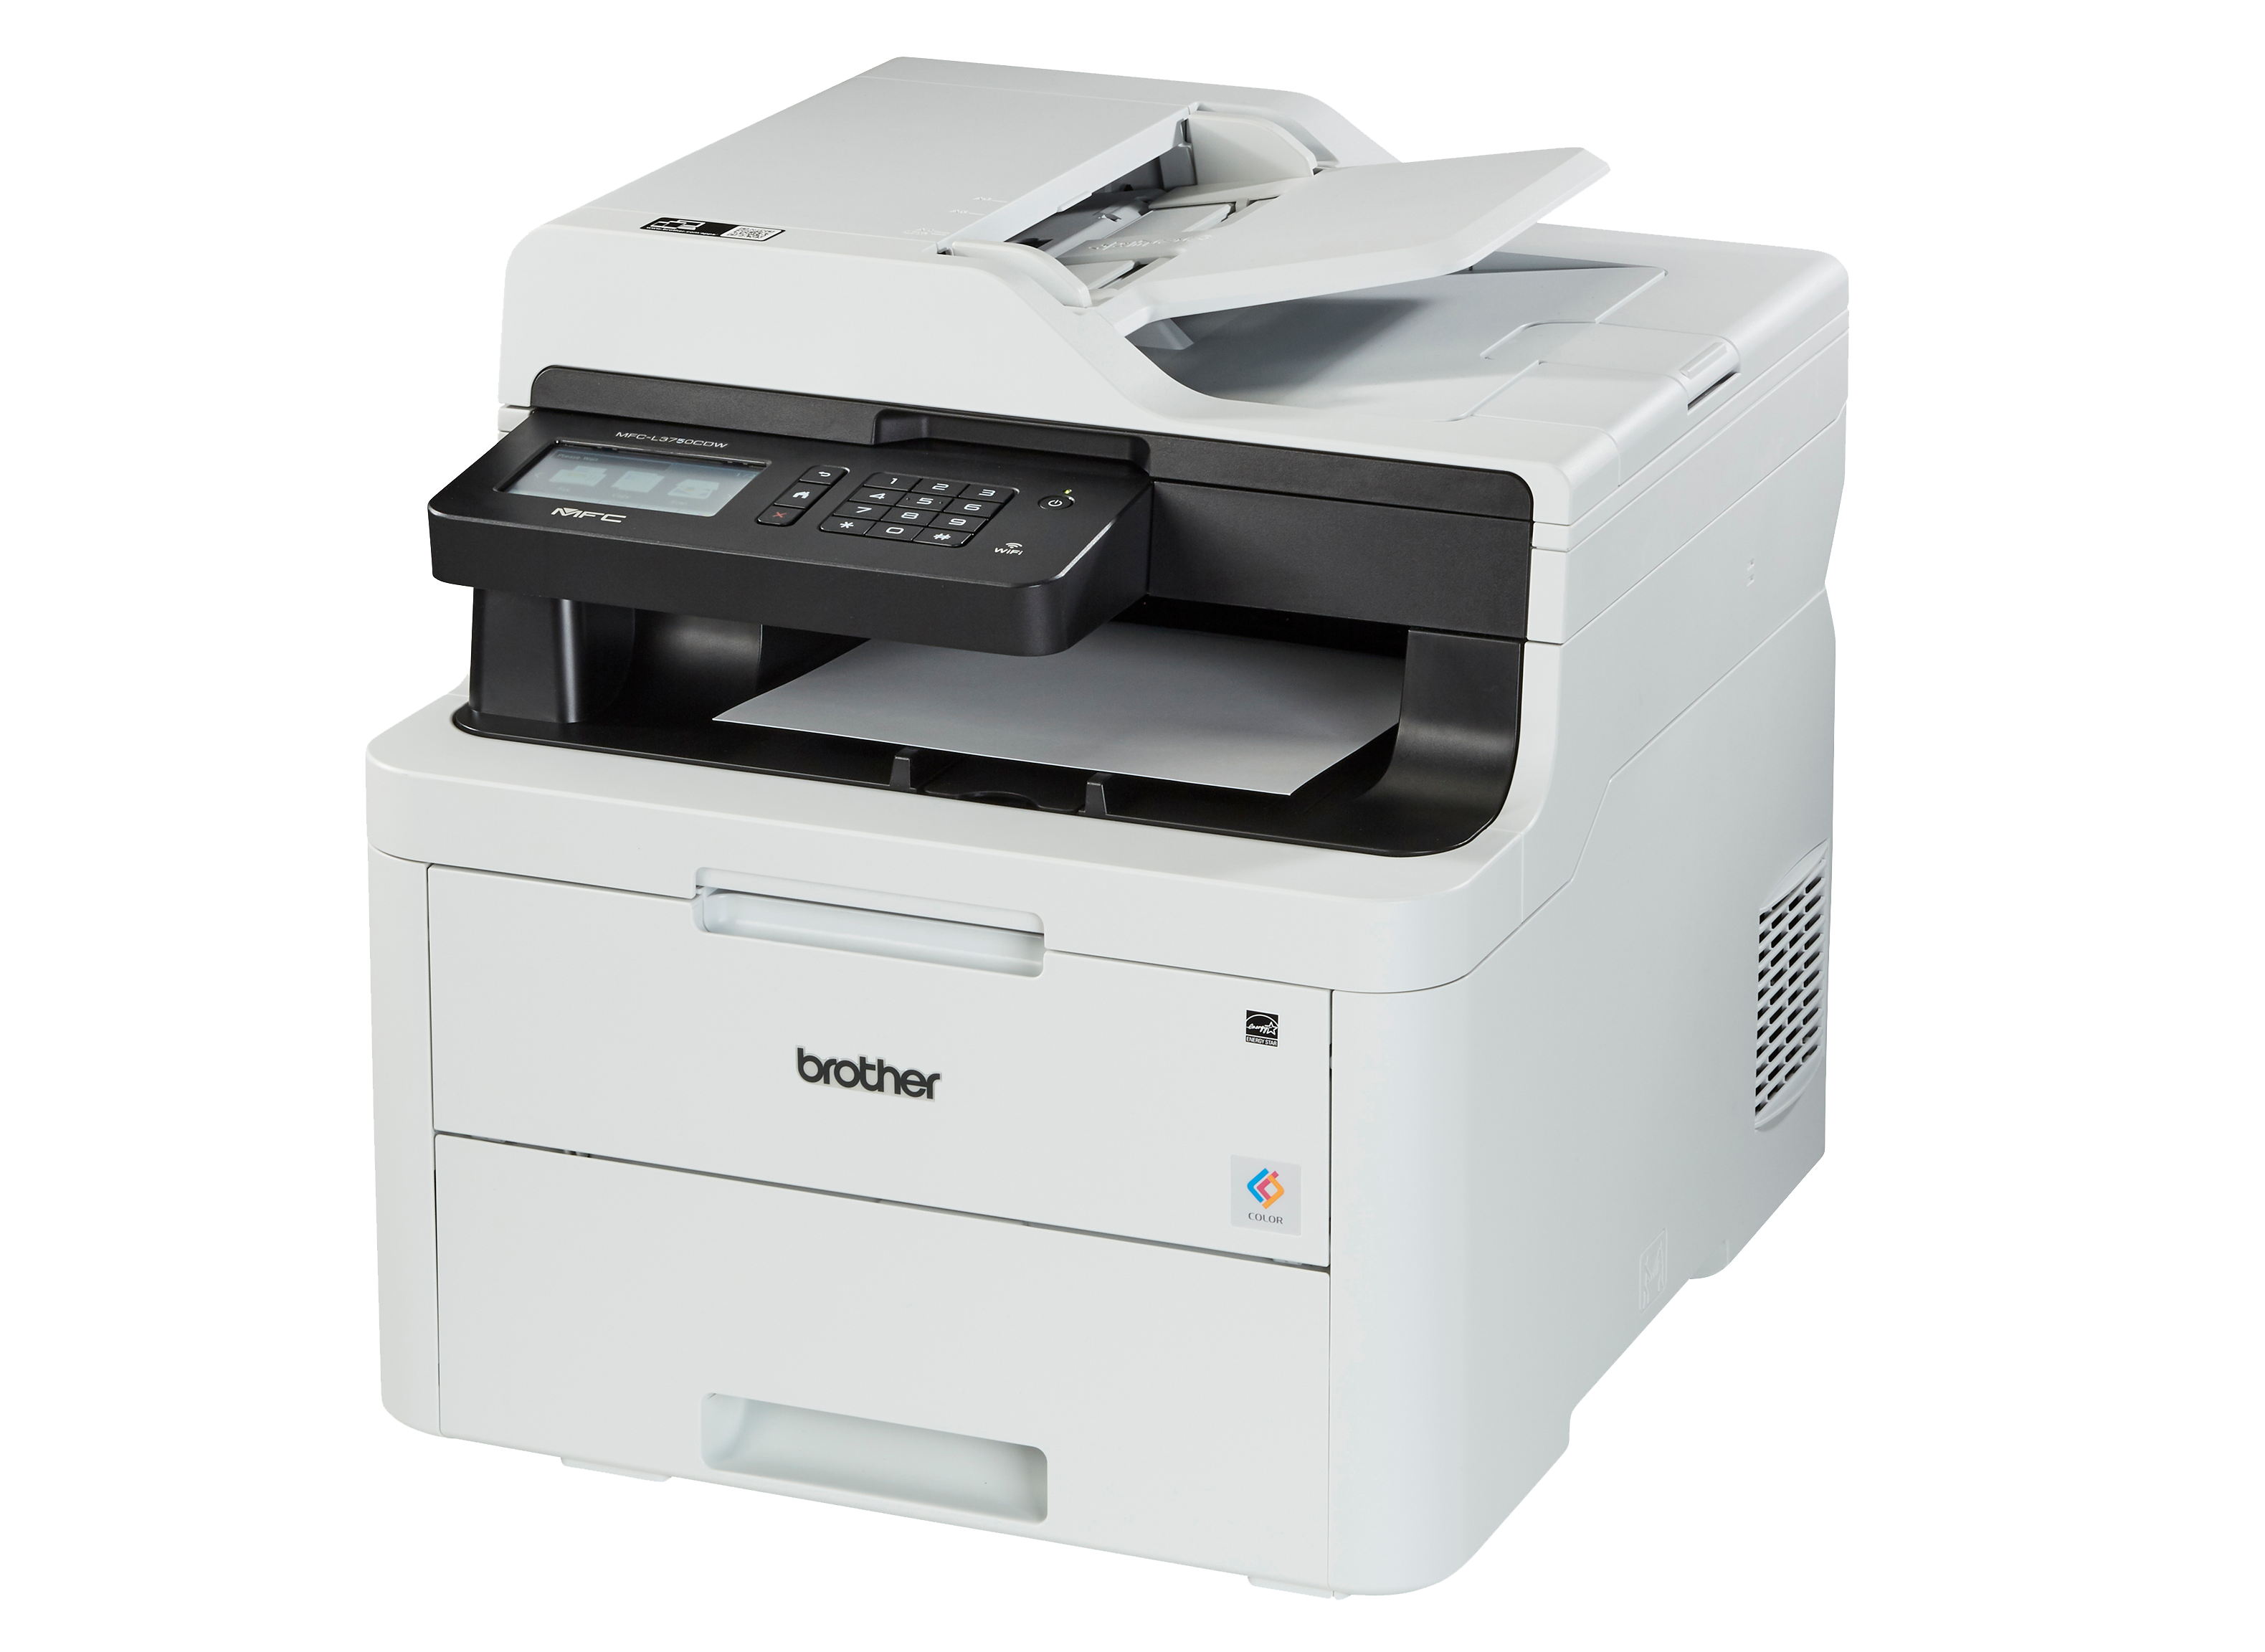 Brother MFC-L3750CDW Color Wireless Laser Printer/Copier/Scanner